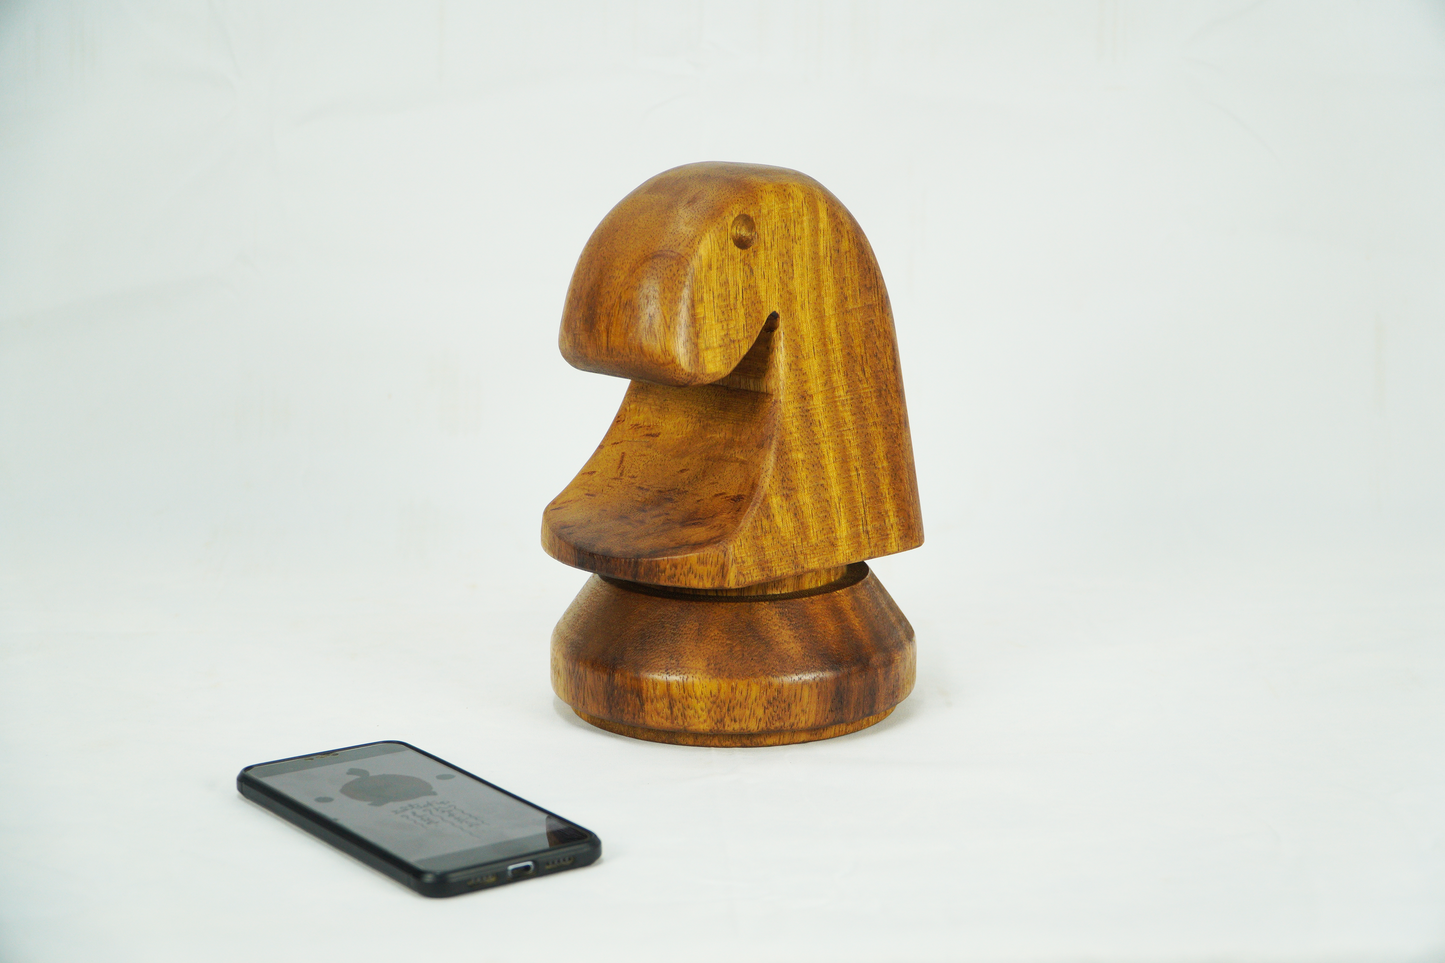  Wooden decorative figure Horse chess